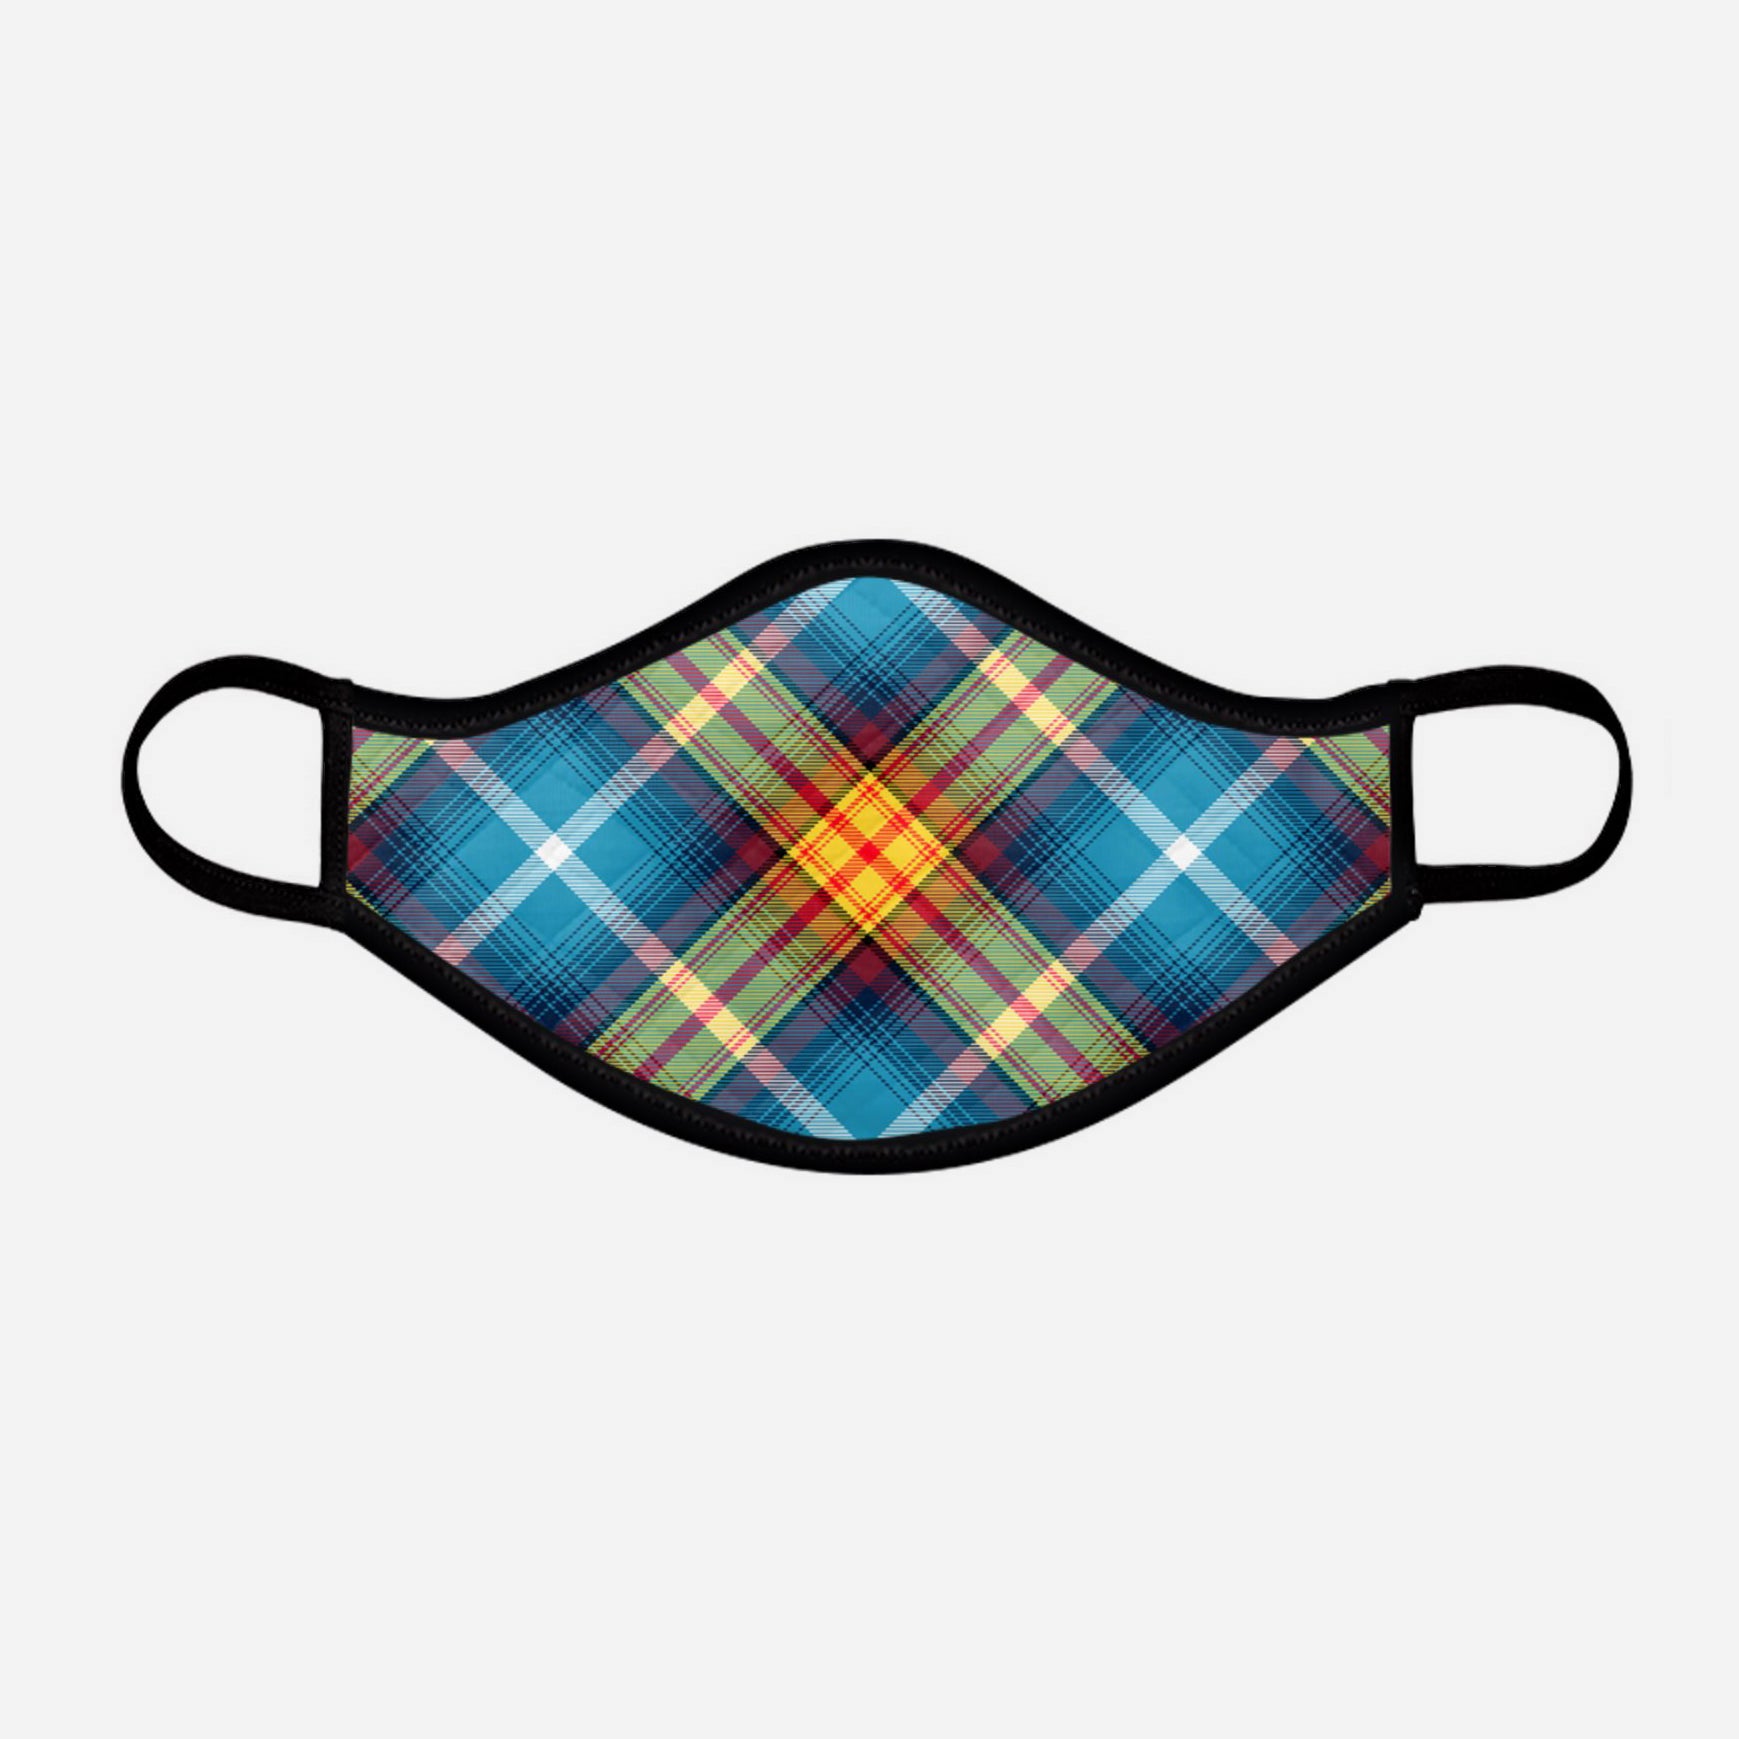 Contoured Face Mask - face covering - Nicola Sturgeon - Declaration of Scottish Independence tartan - by Steven Patrick Sim the Tartan Artisan - Stevie Tartan Guy - medium